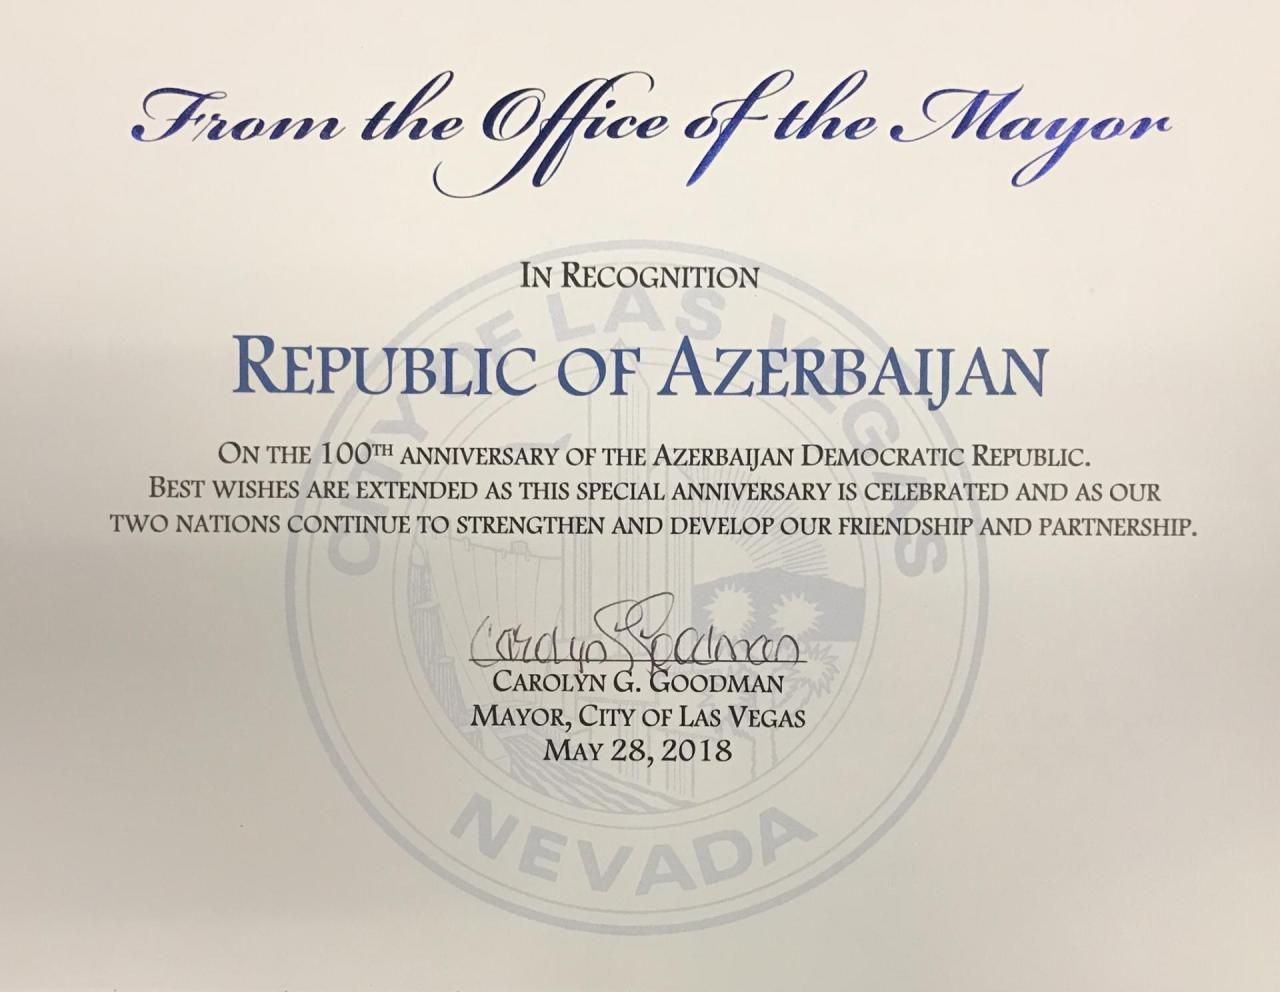 Mayor of Las Vegas inks proclamation on centenary of Azerbaijan Democratic Republic [PHOTO]